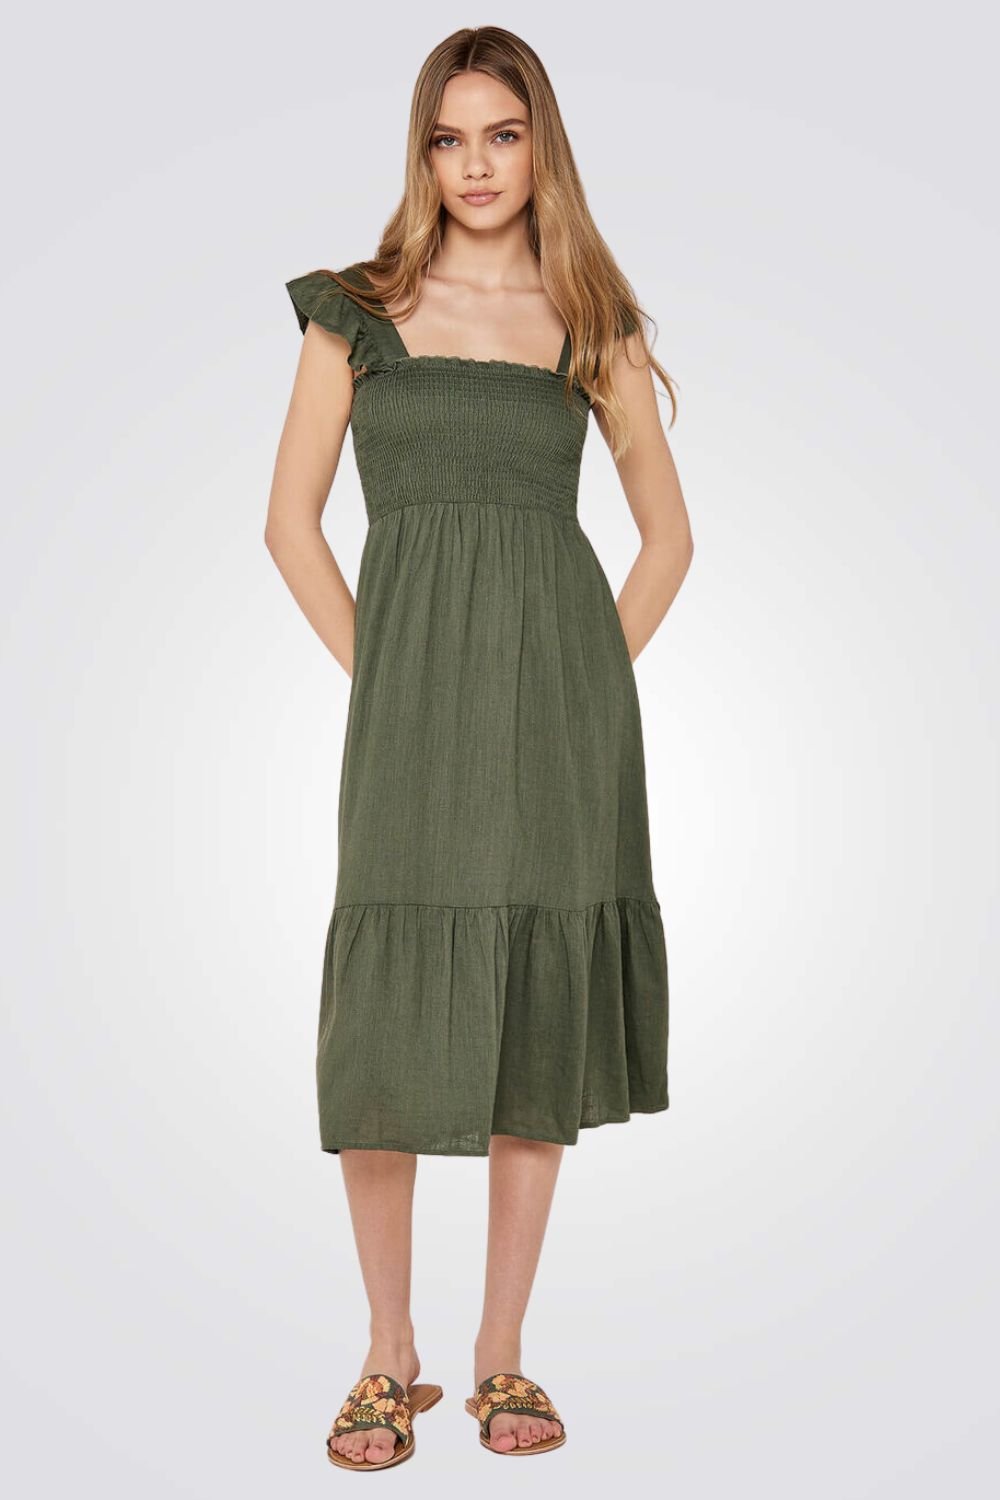 APRICOT - שמלת מידי עם רצועות מסולסלות בצבע ירוק זית - MASHBIR//365